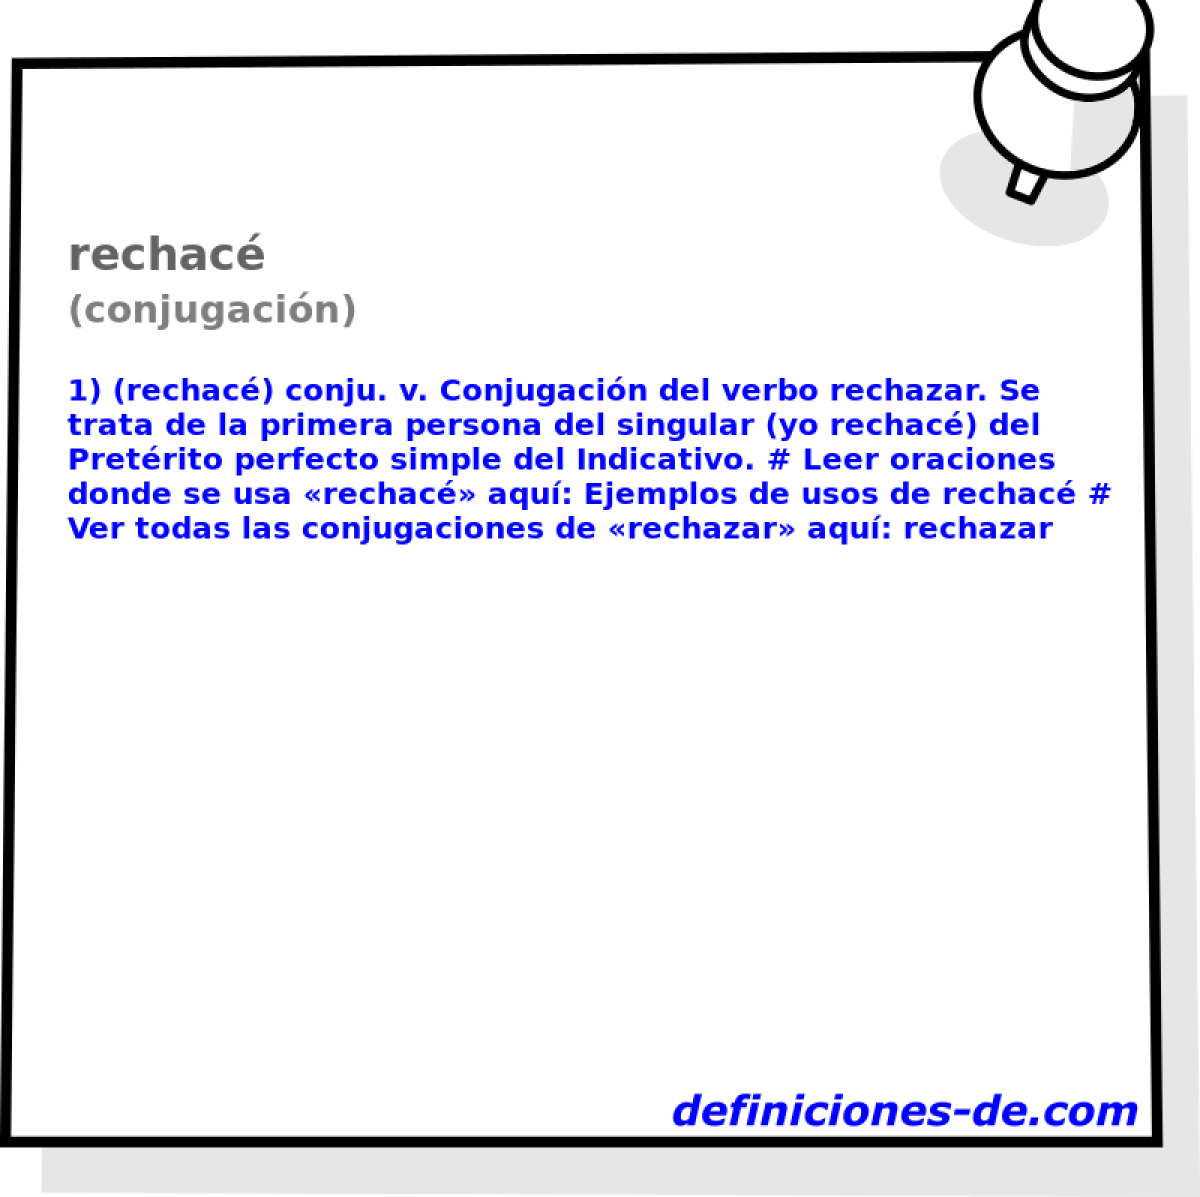 rechac (conjugacin)